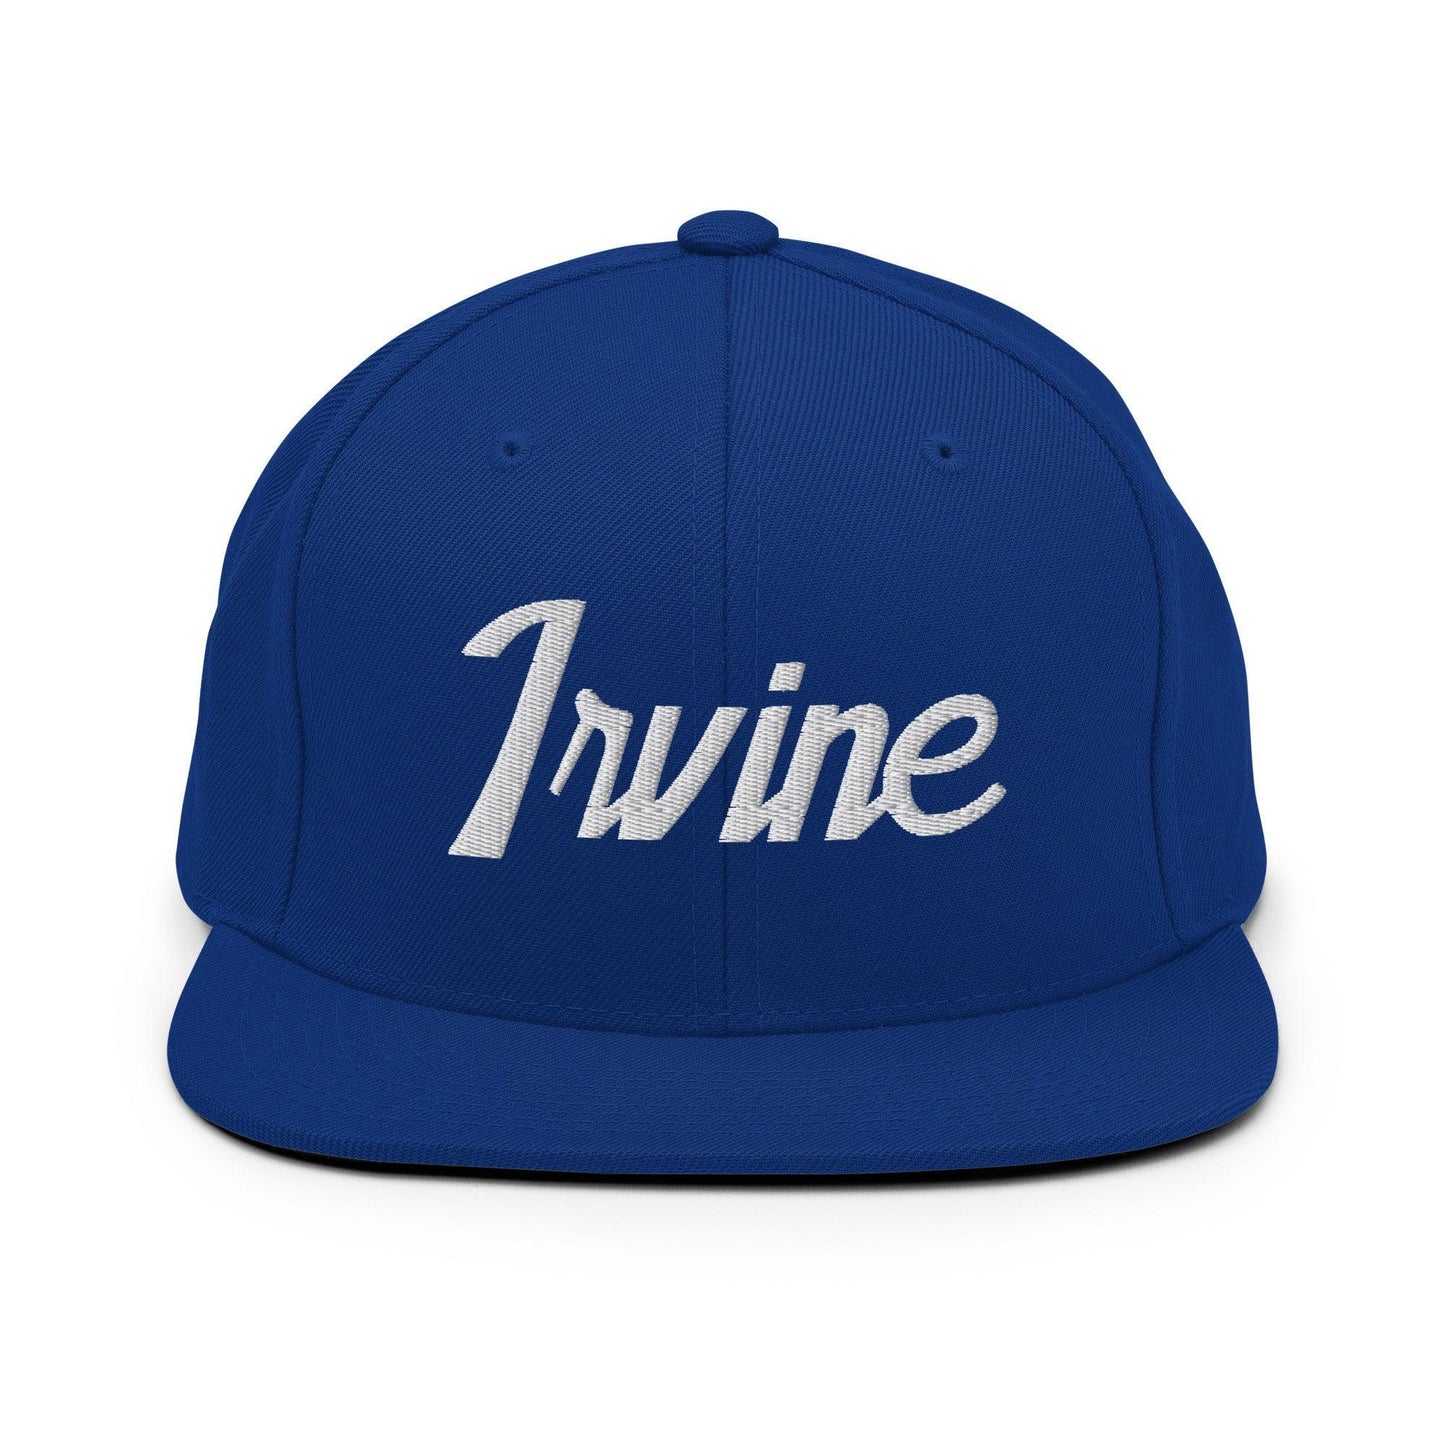 Irvine Script Snapback Hat Royal Blue